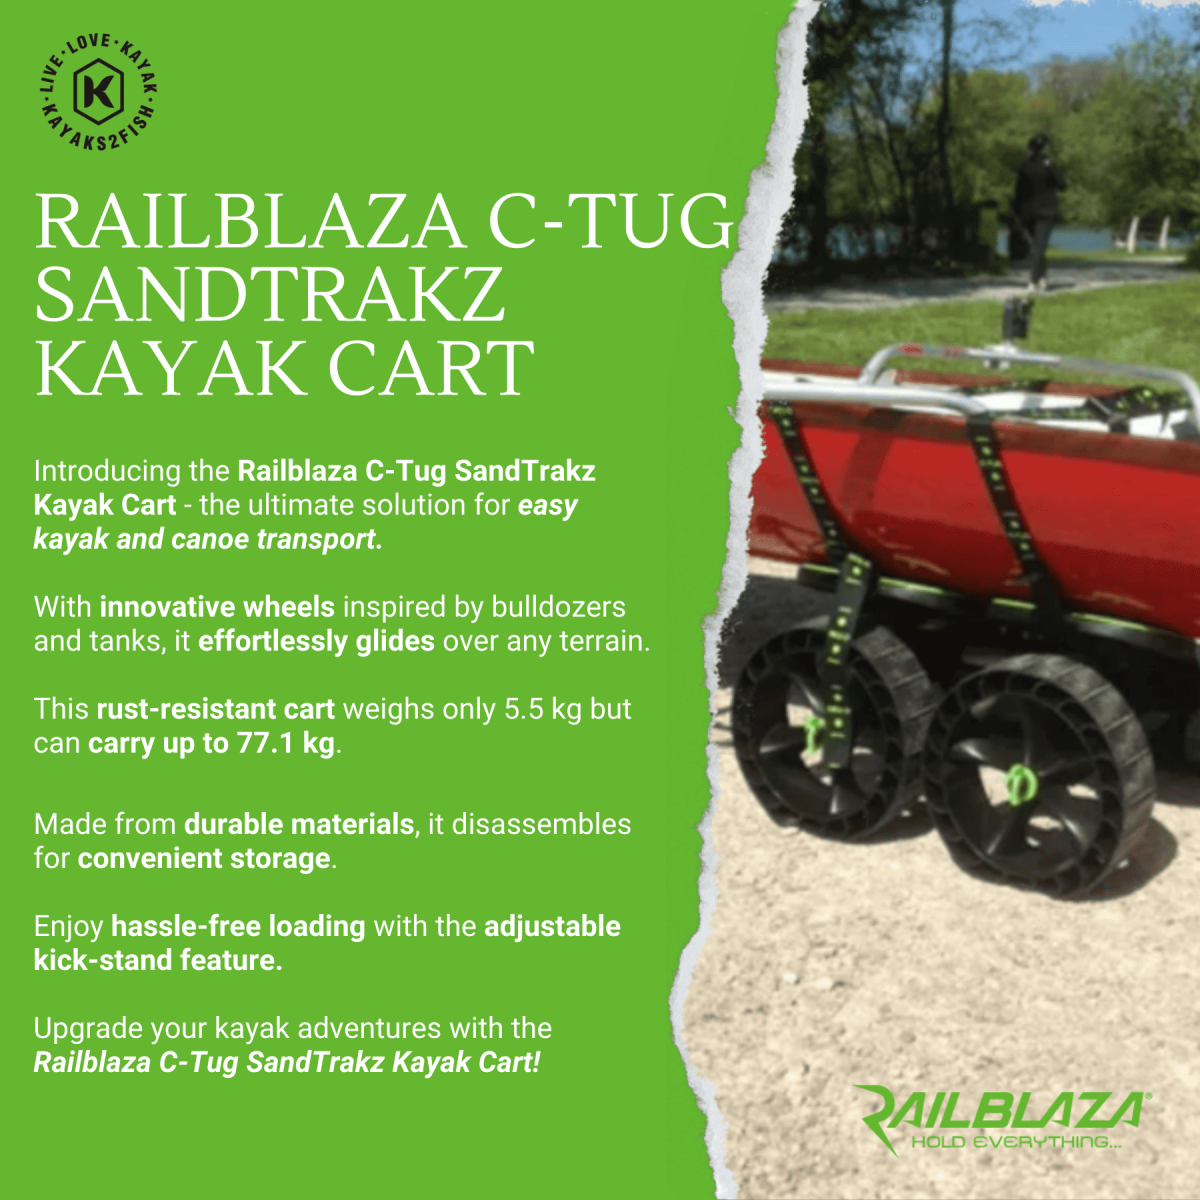 Railblaza C-Tug SandTrakz Kayak Cart